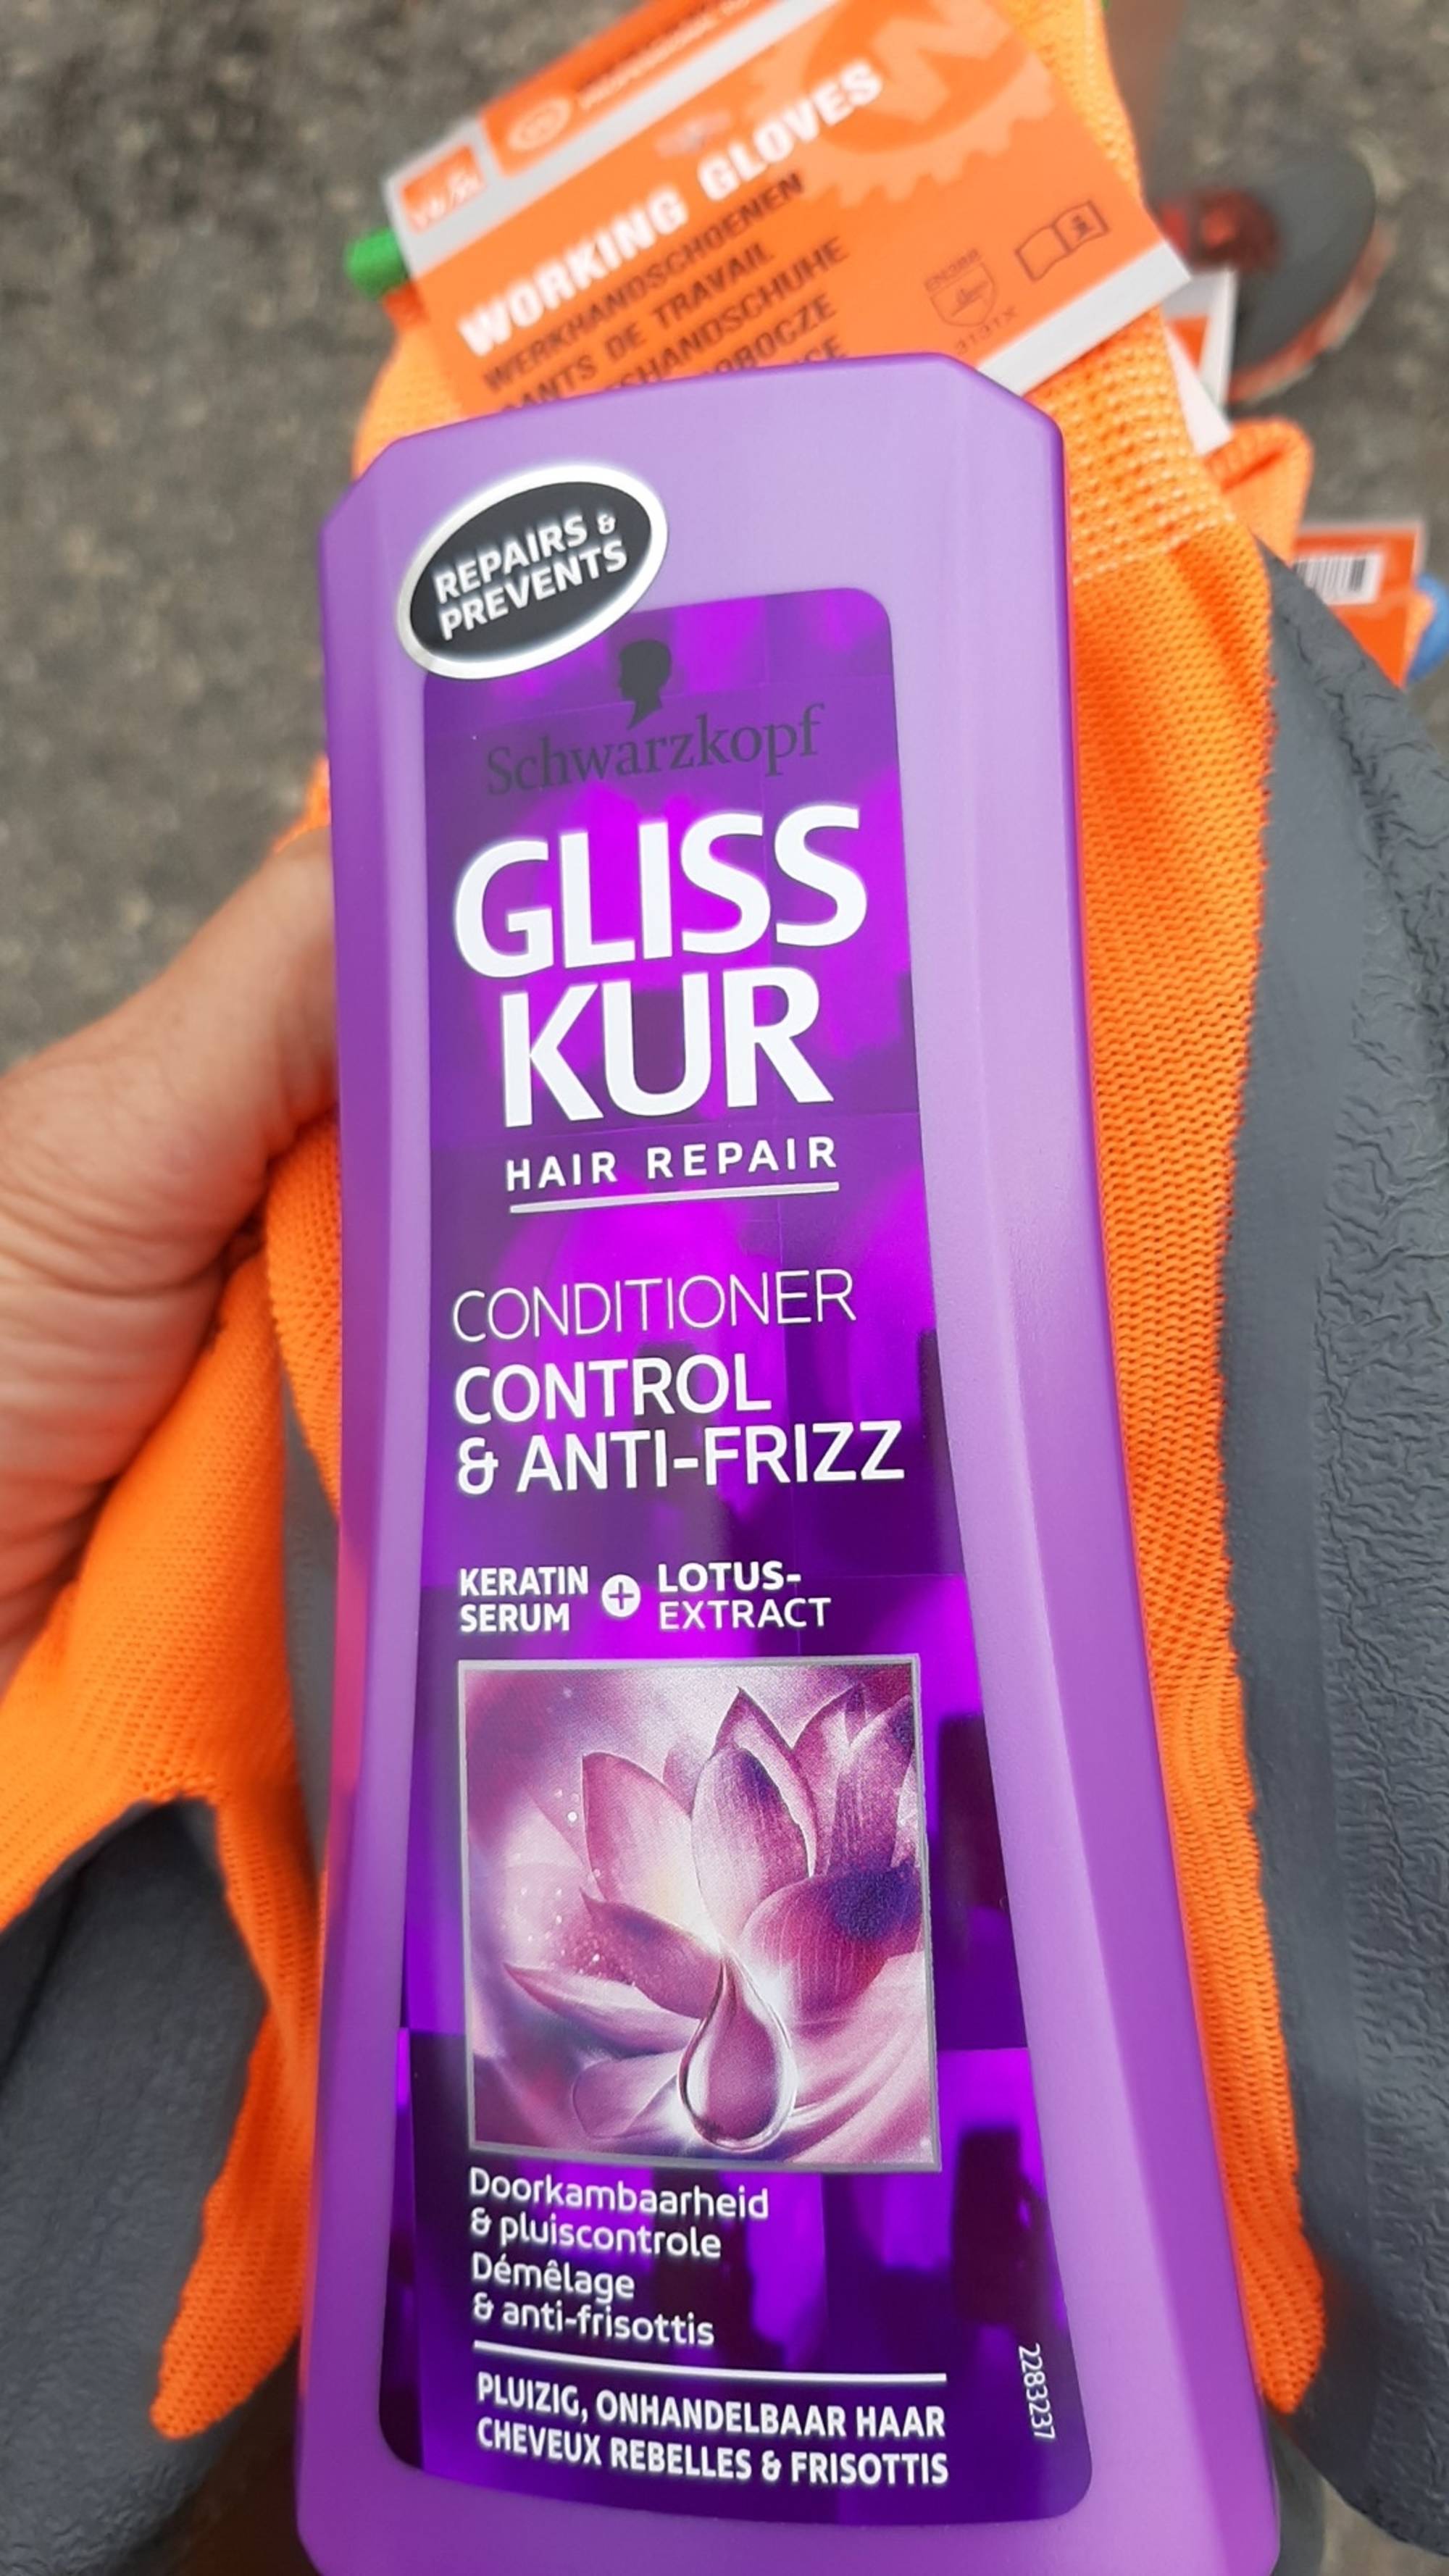 SCHWARZKOPF - Gliss kur hair repair - Conditioner control & anti-frizz